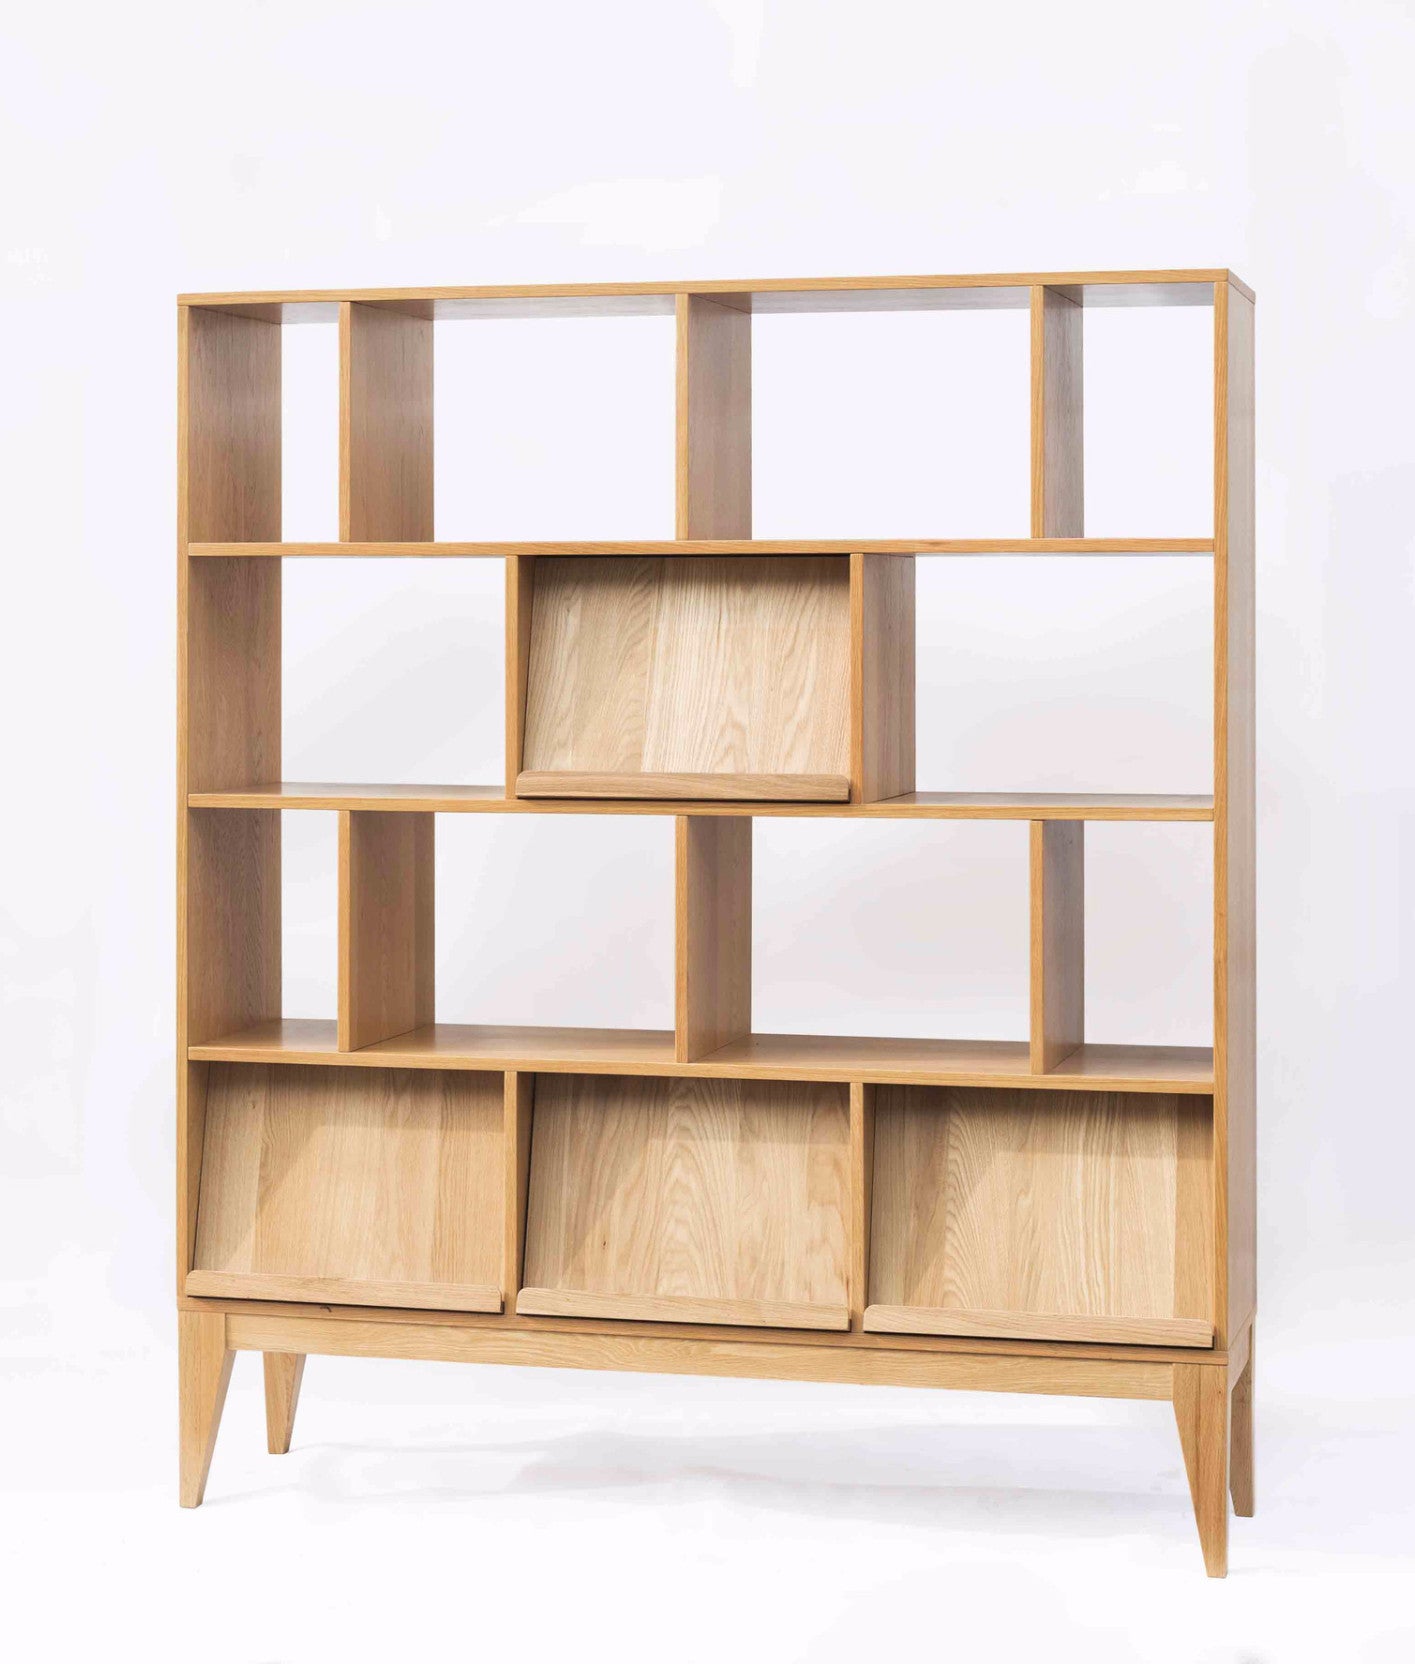 KARLI BOOKSHELF Bookshelf ziinlife Natural Oak